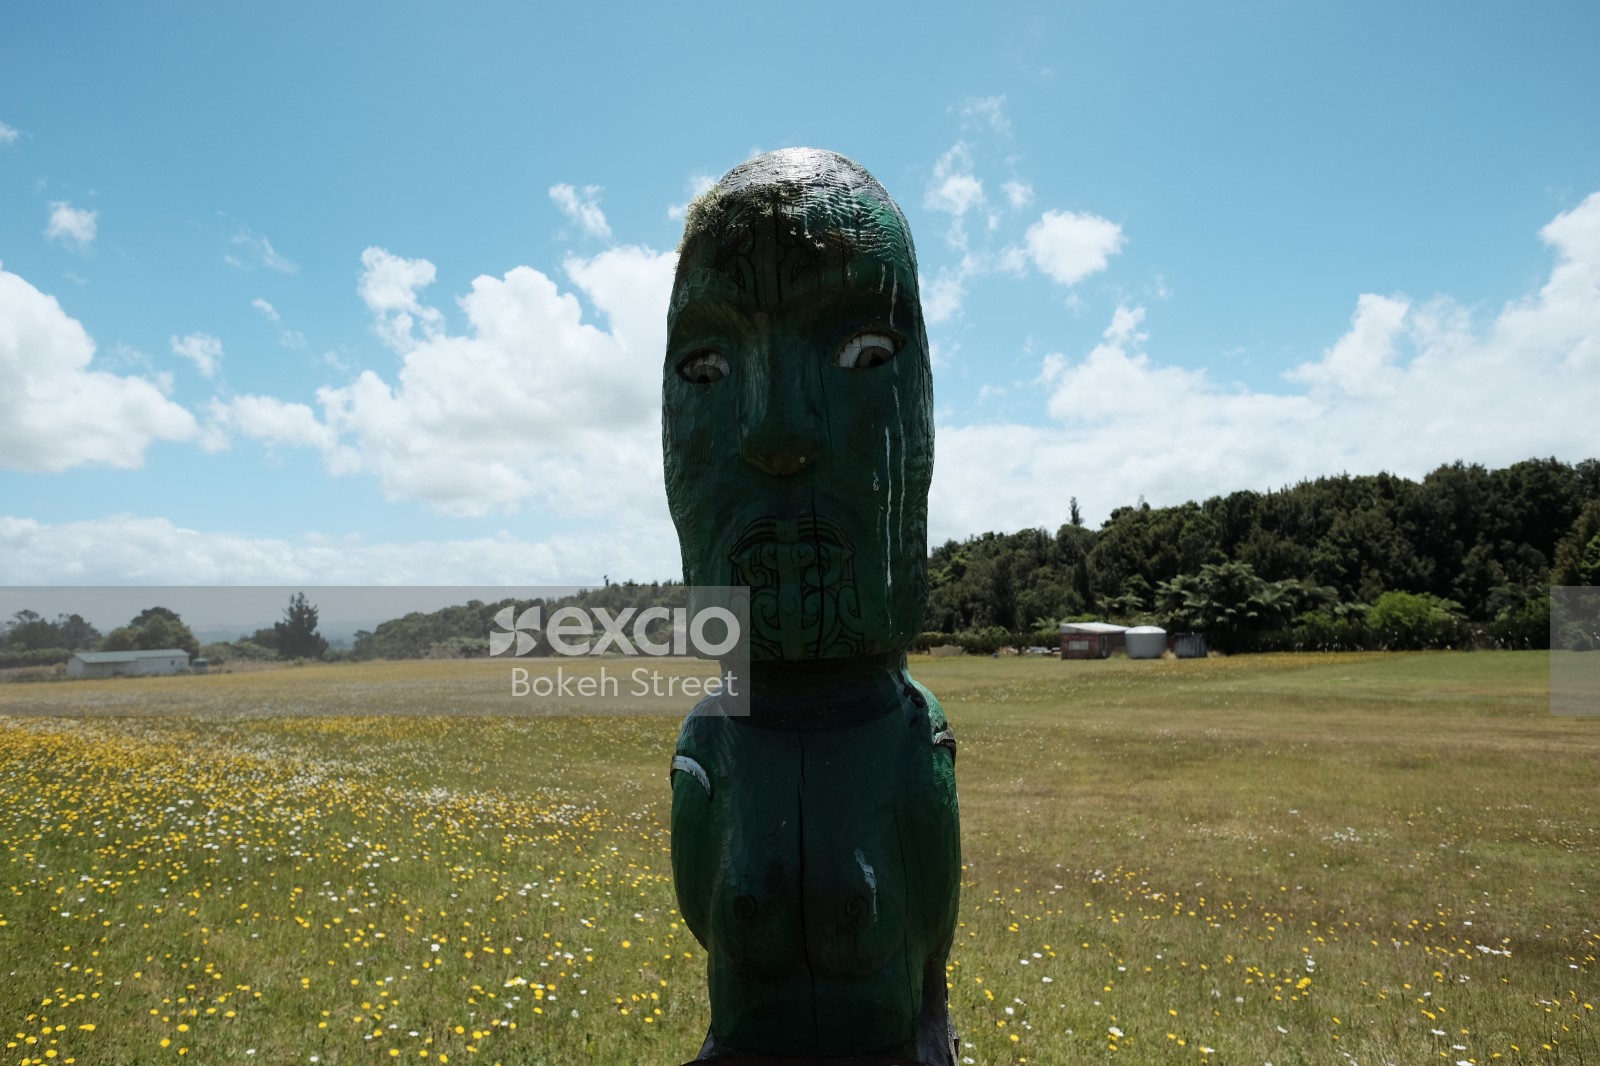 Green Maori statue Marae in grass